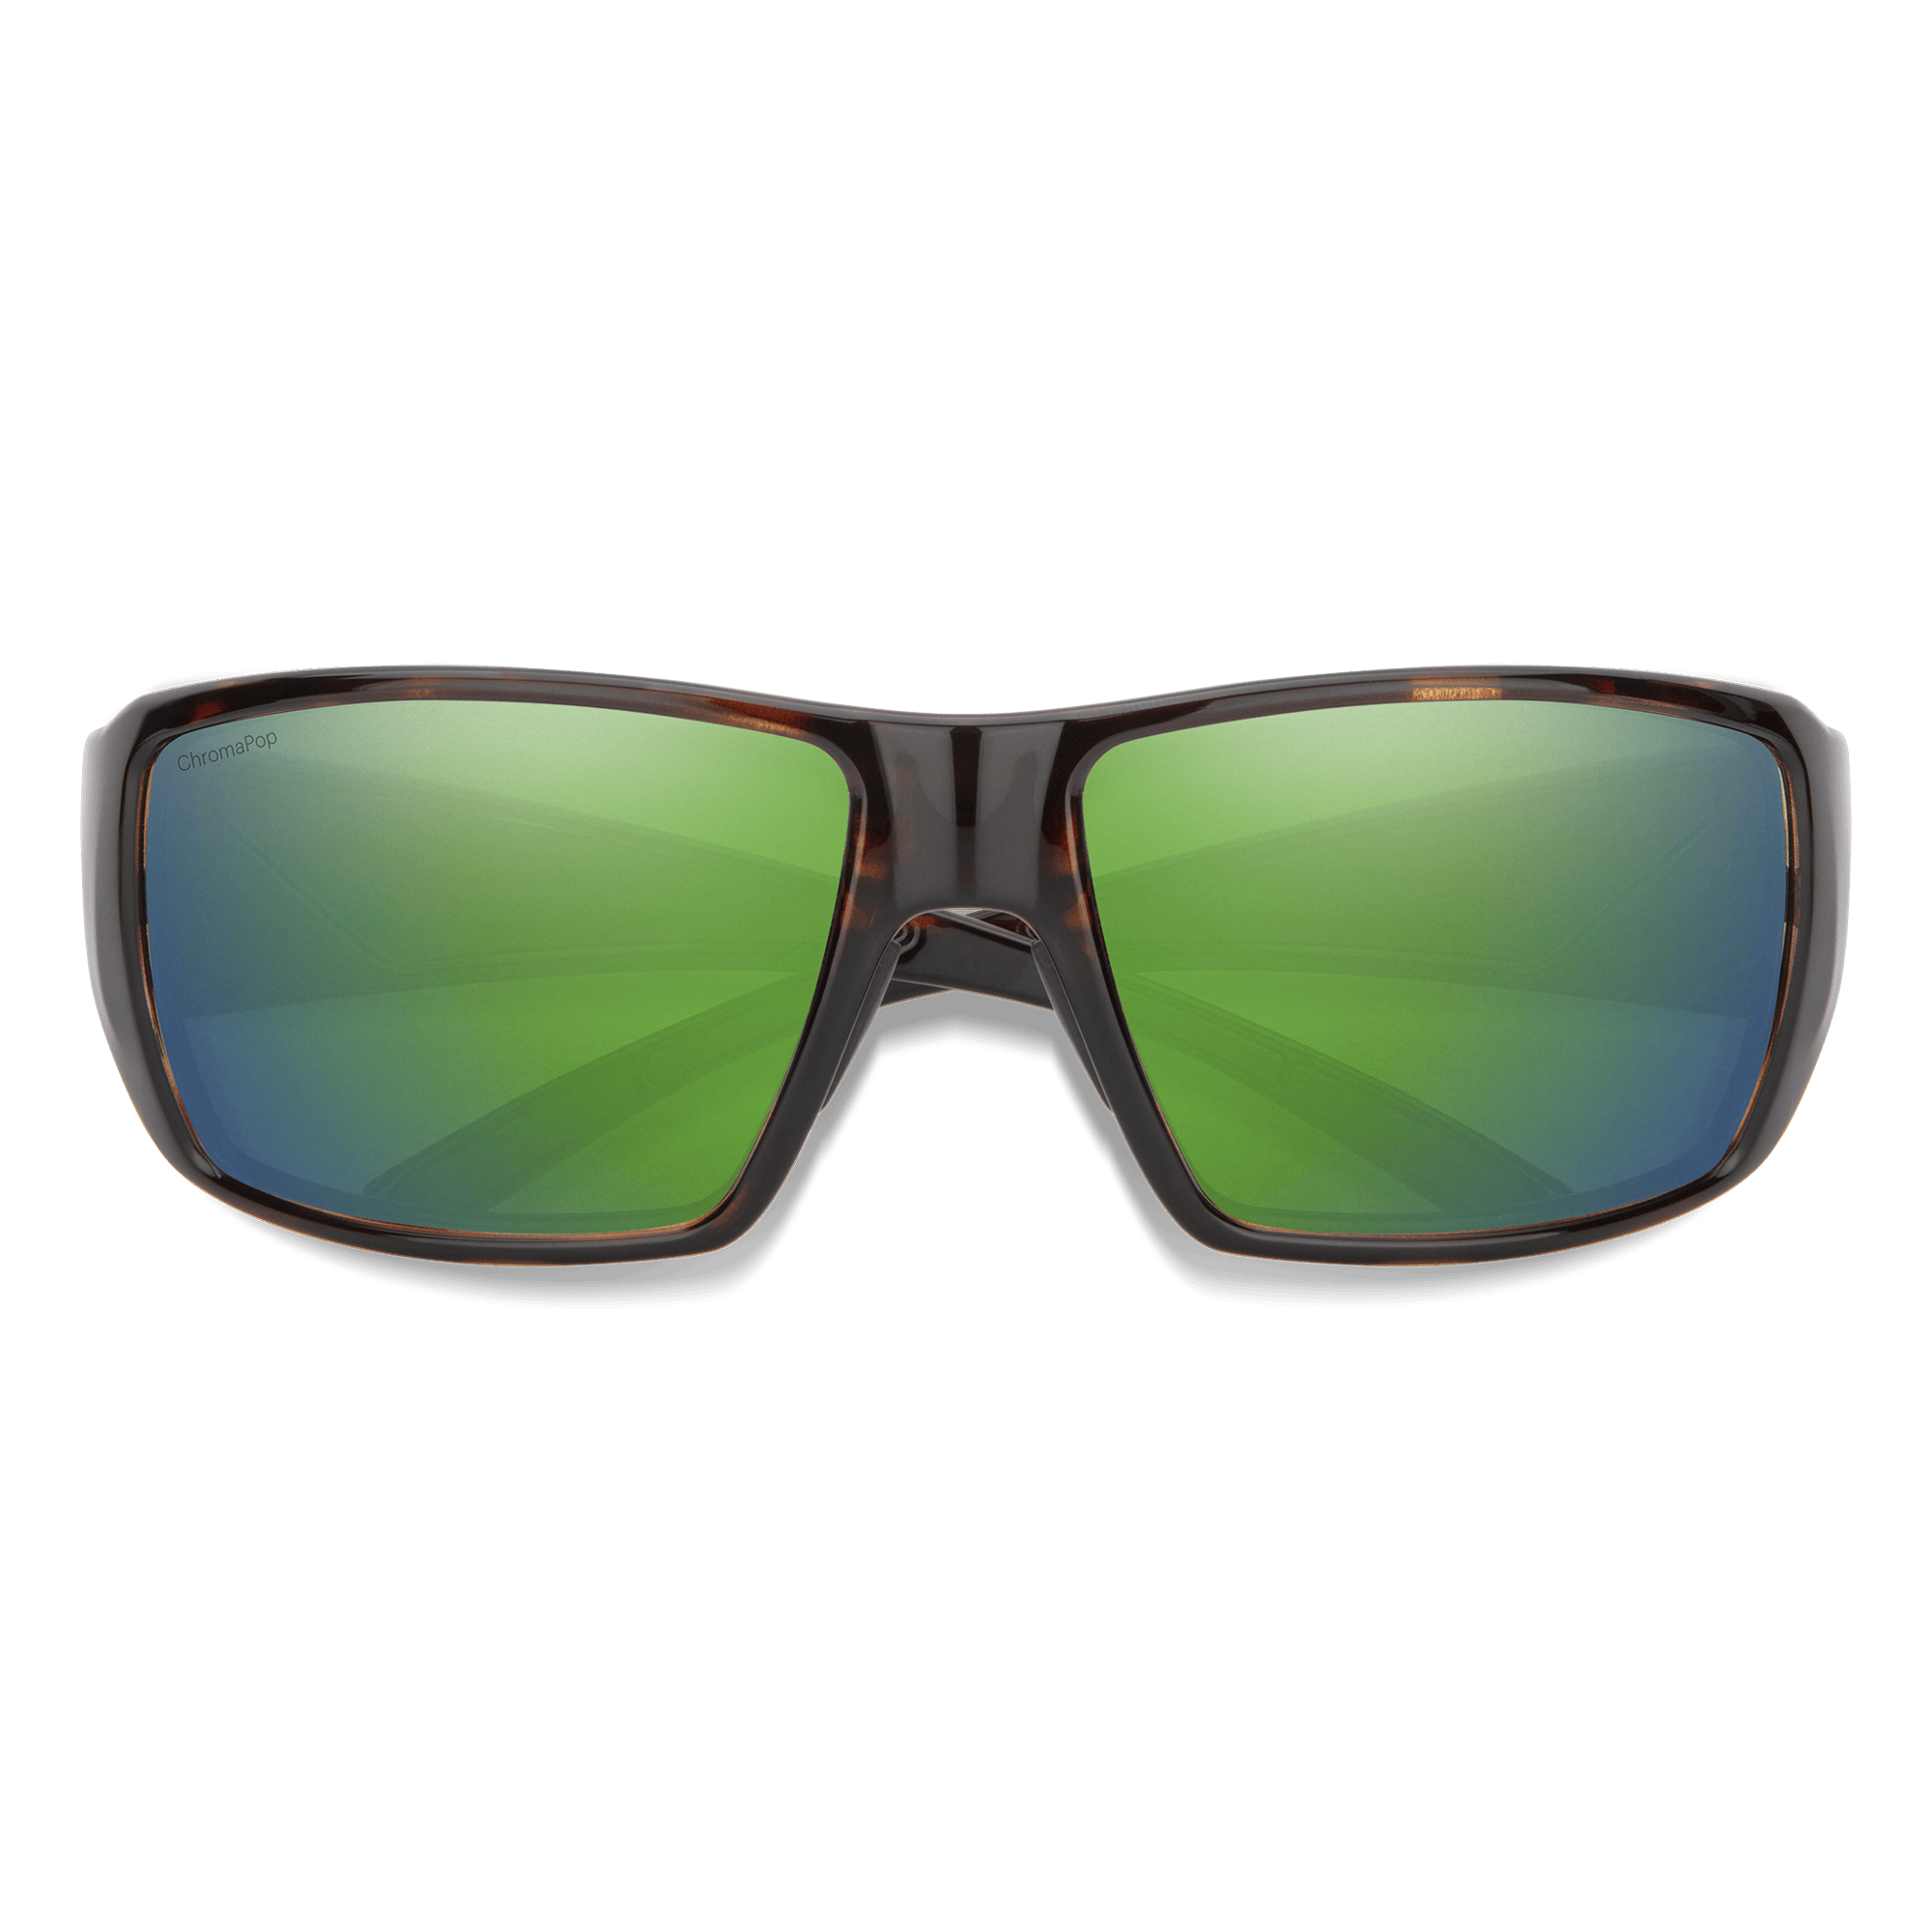 Guide's Choice, Tortoise + ChromaPop Glass Polarized Green Mirror Lens, hi-res